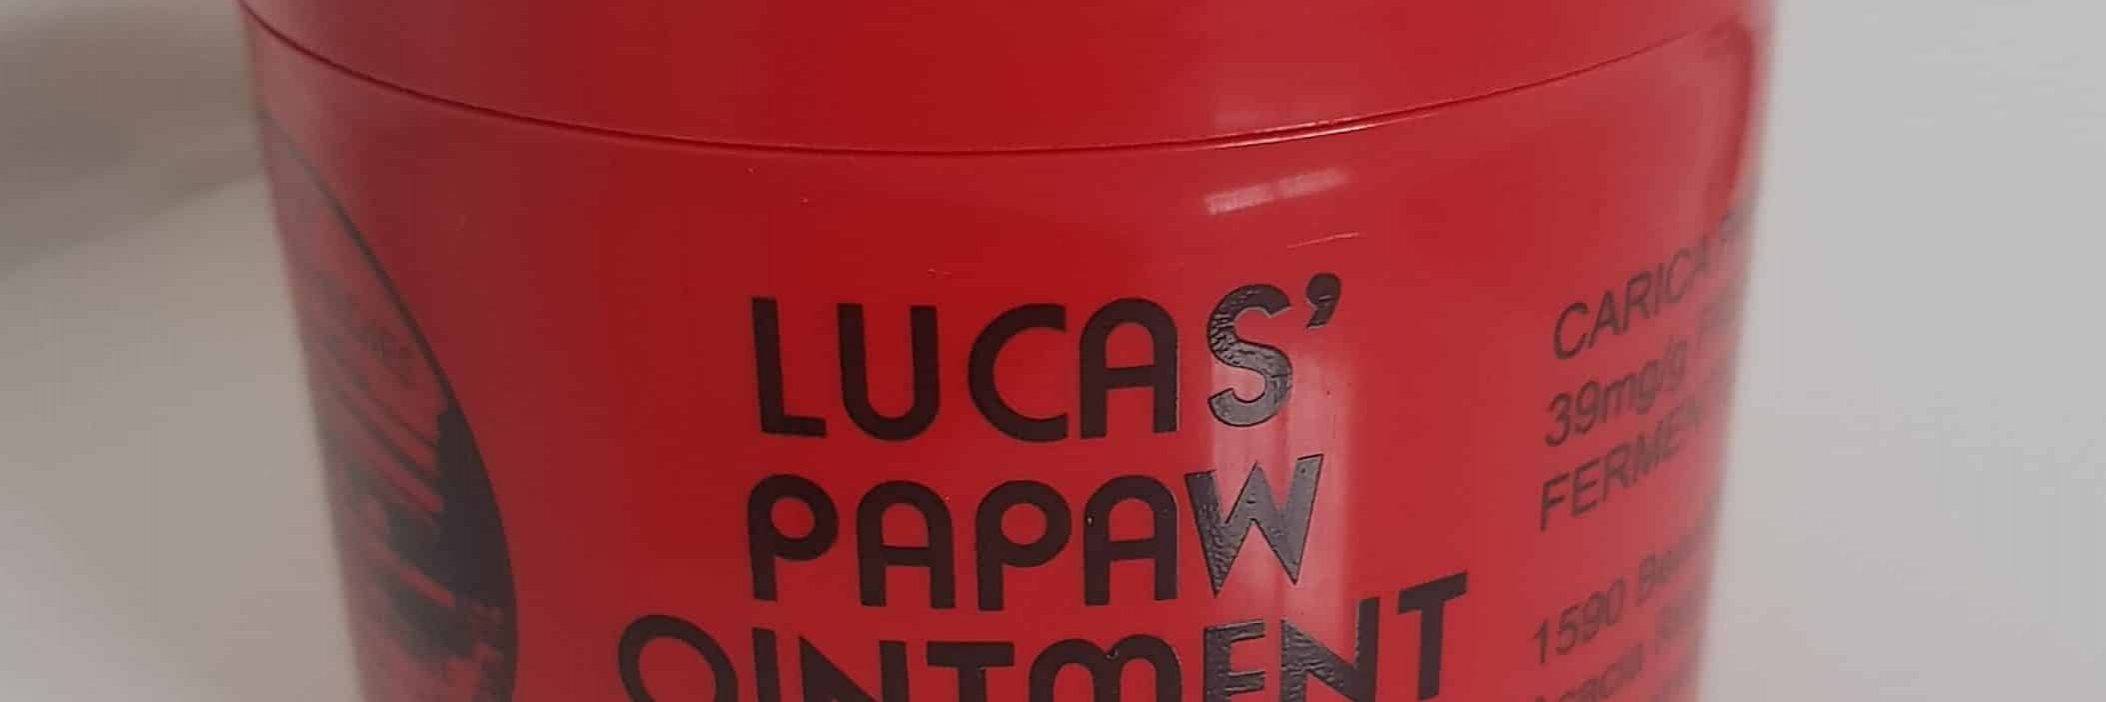 Papaw ointment